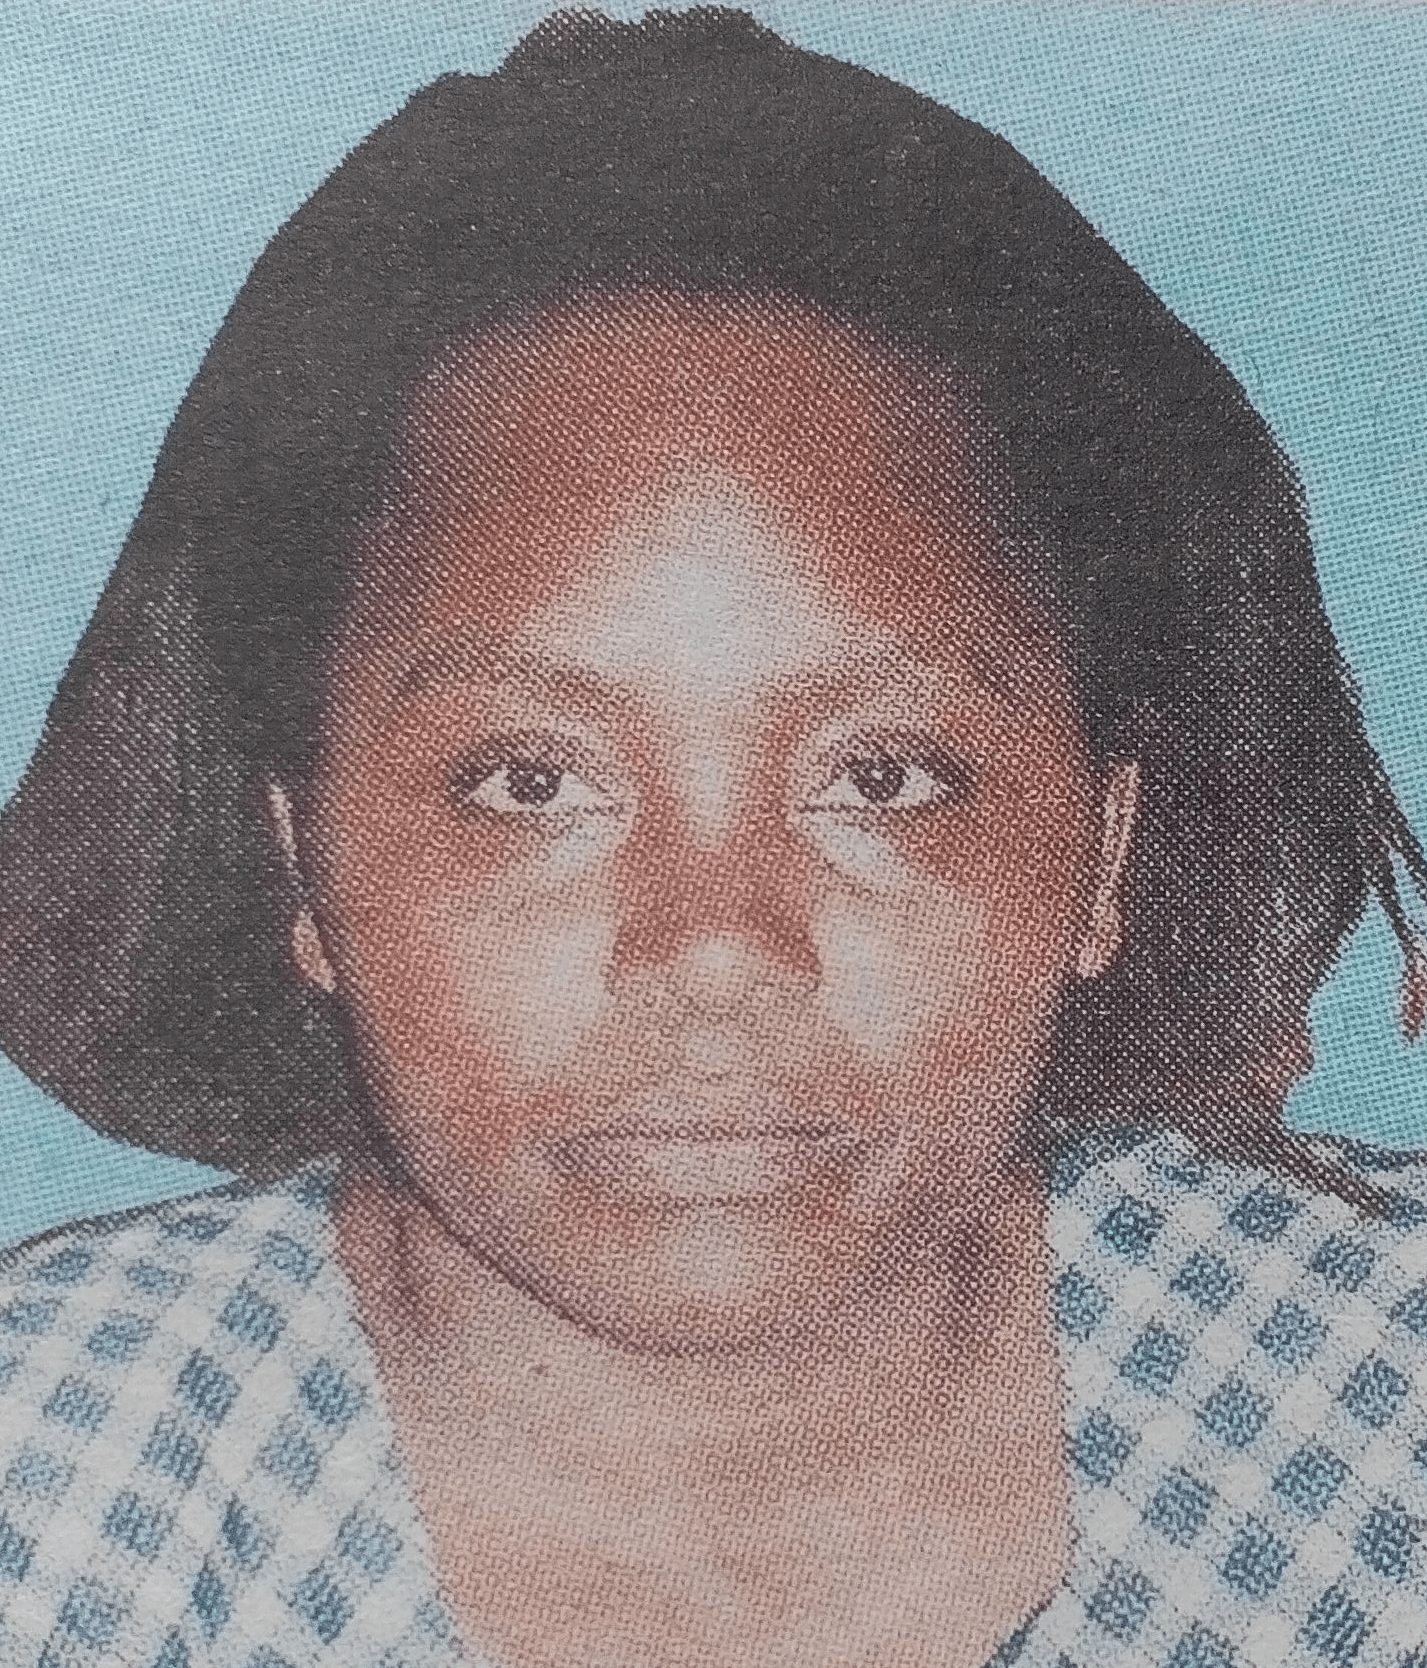 Obituary Image of Susan Mukami Njagi